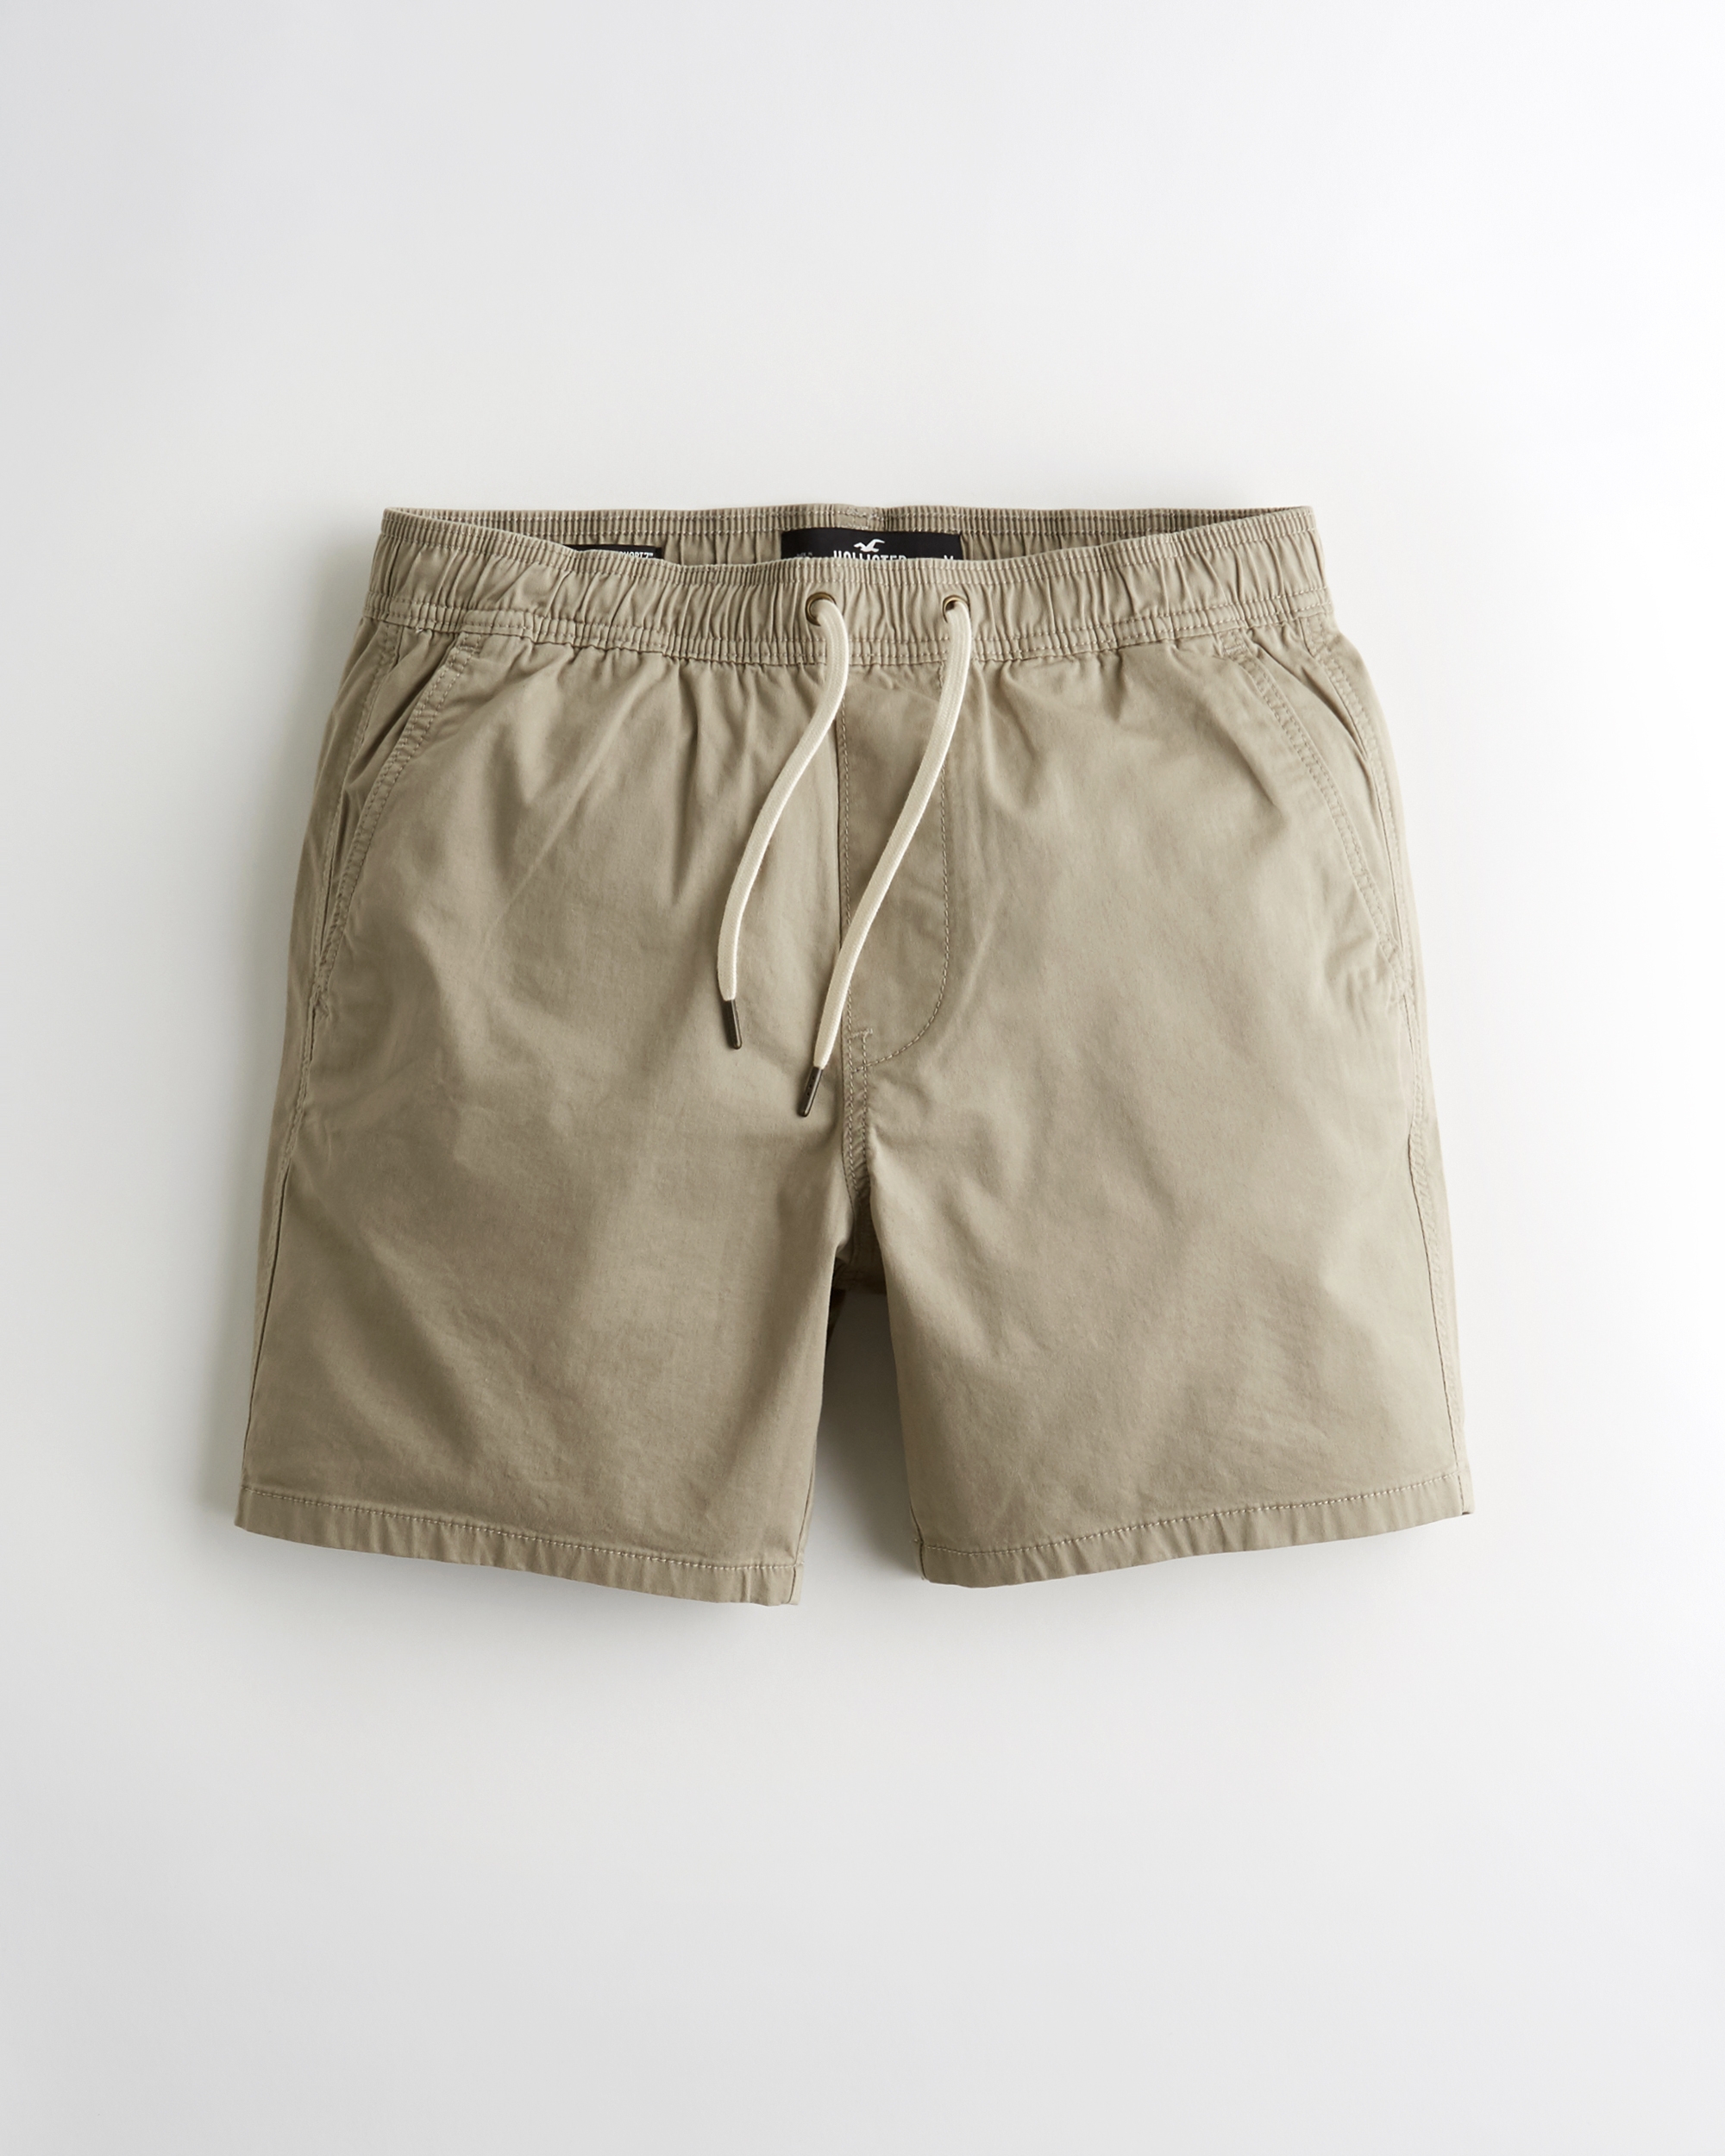 hollister cargo shorts sale